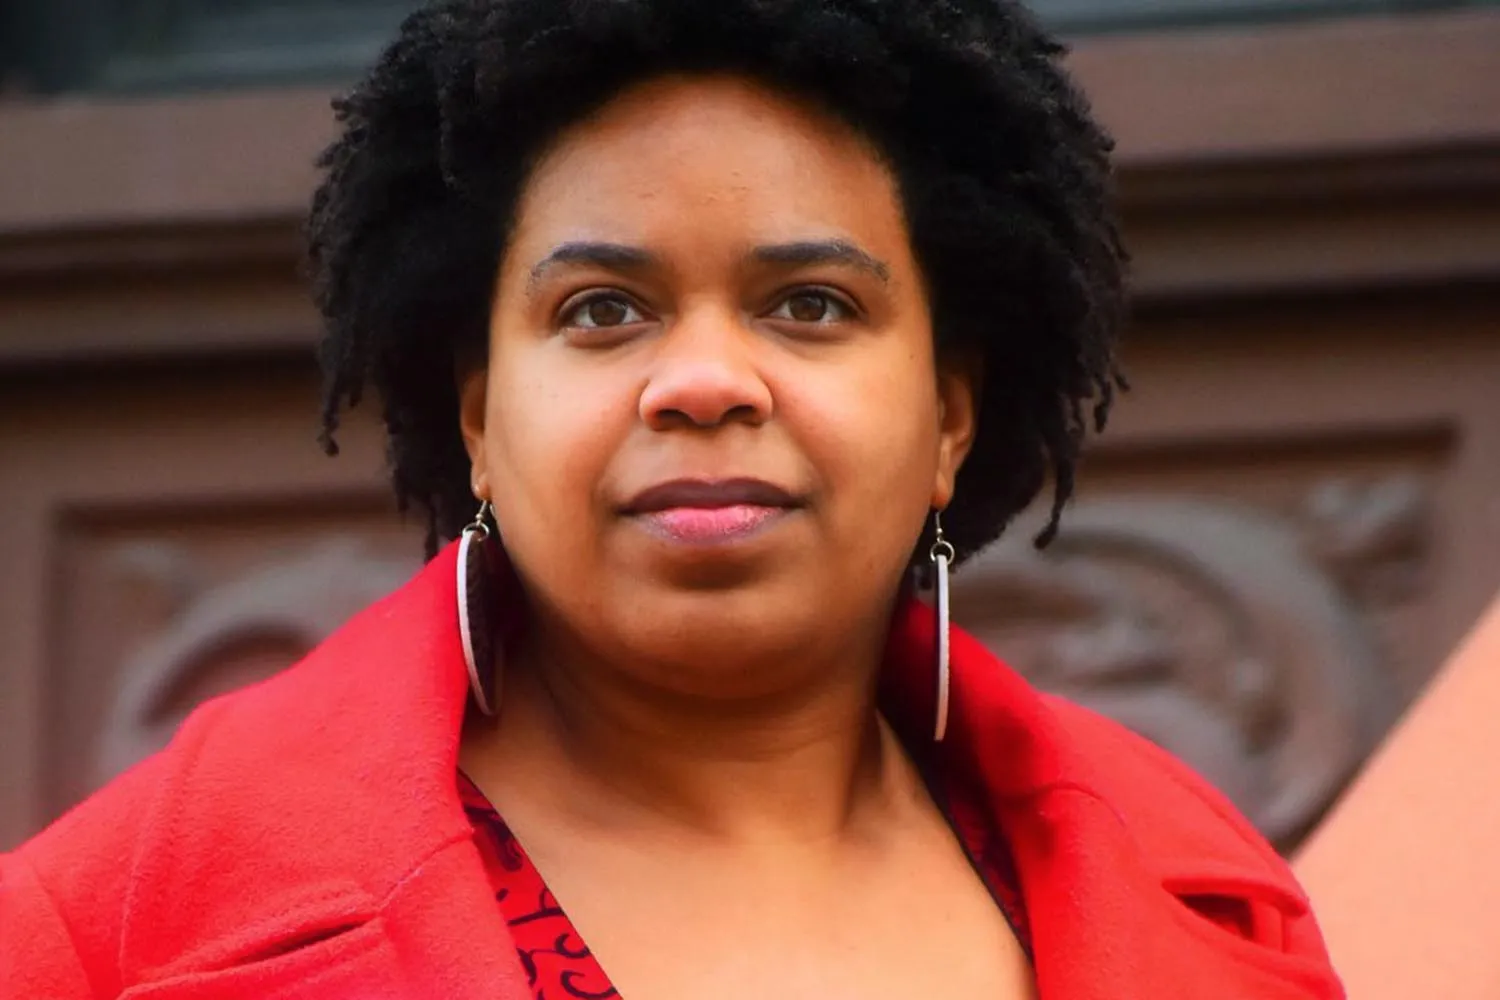 Harlem Loses Funding Because Kristin Jordan Votes Against NYC Budget